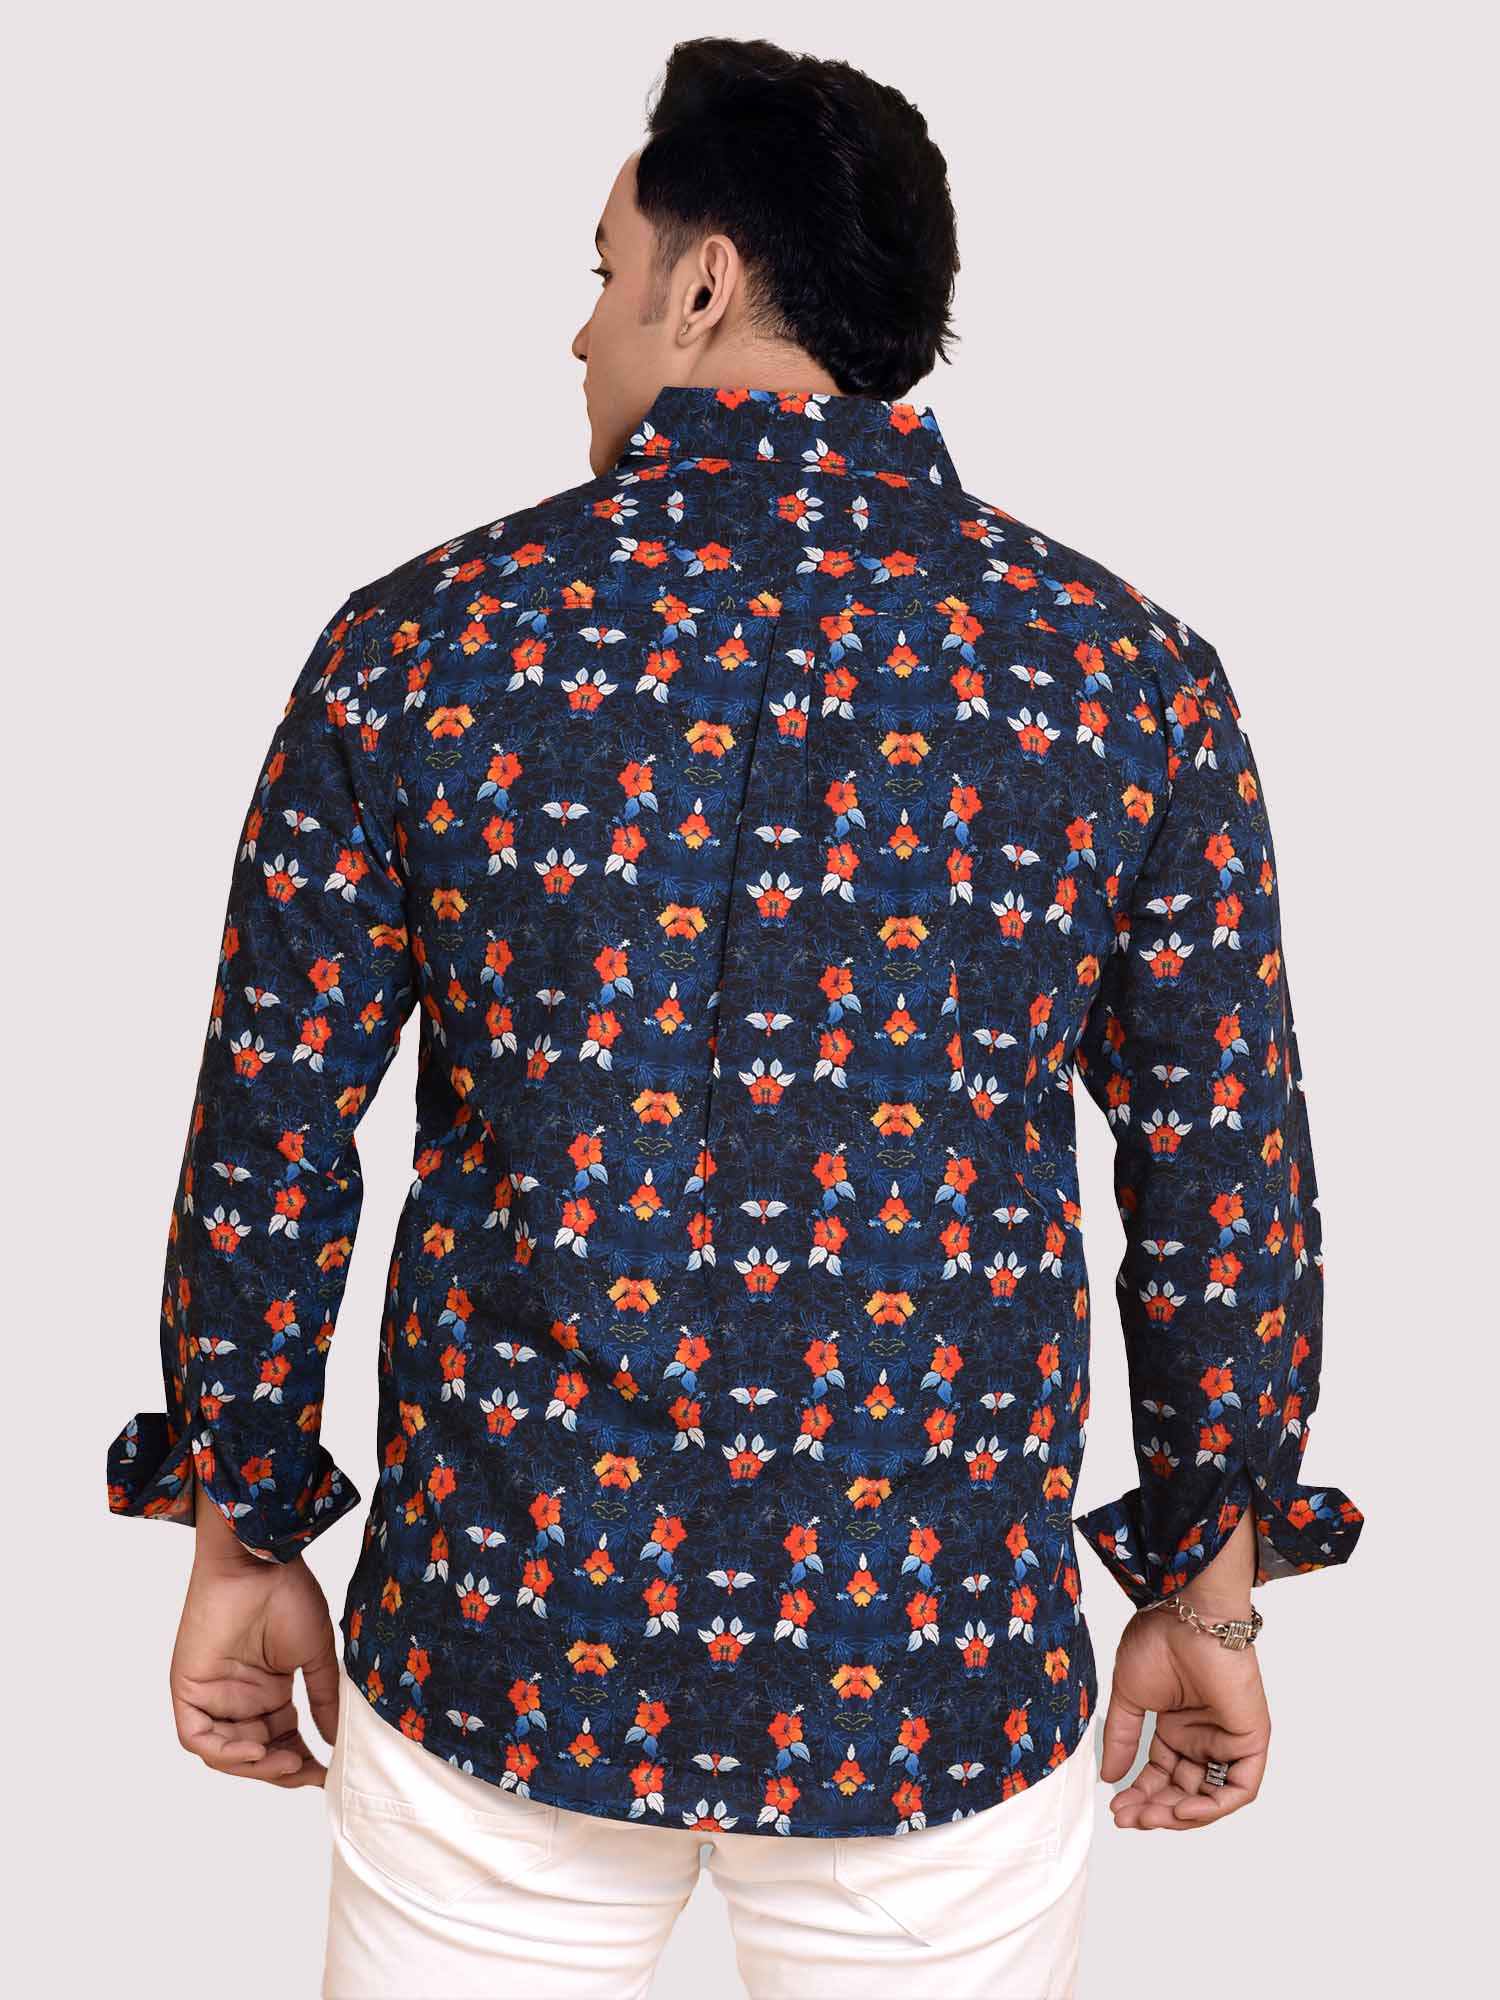 Flower On Navy Printed Cotton Full sleeve Men's Plus size